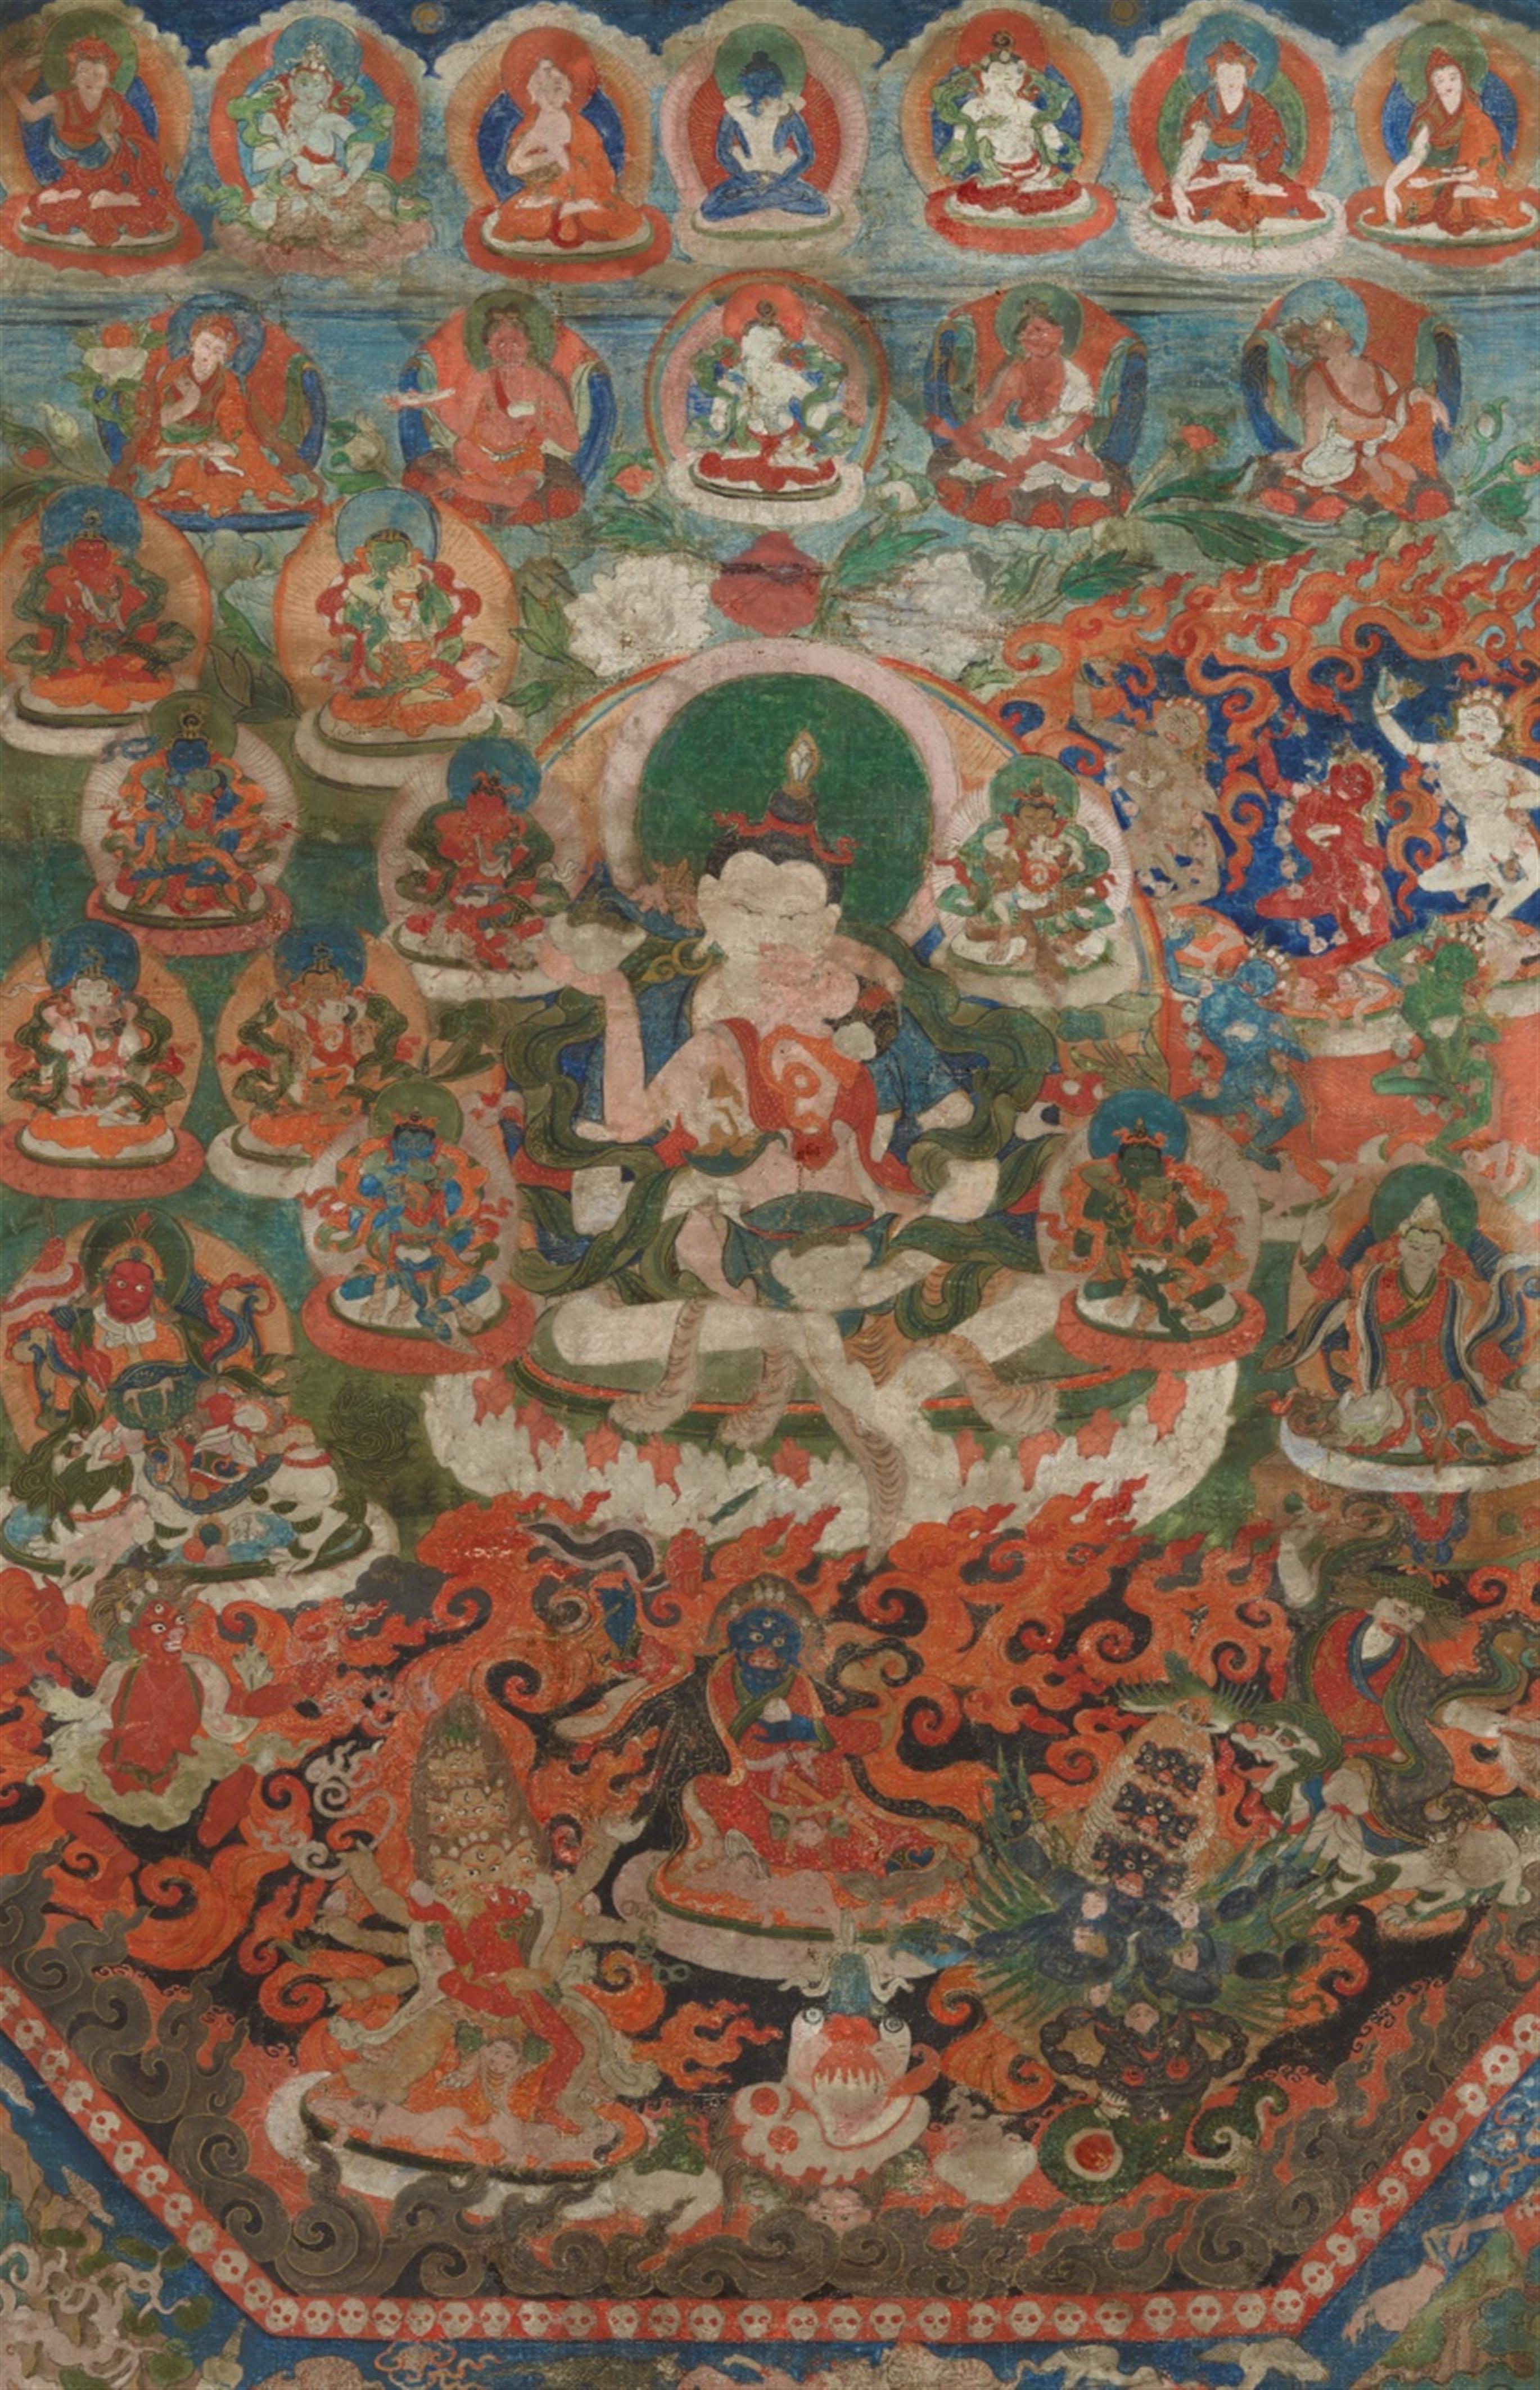 Thangka des Samantabhadra in yab yum. Tibet. 18./19. Jh. - image-1